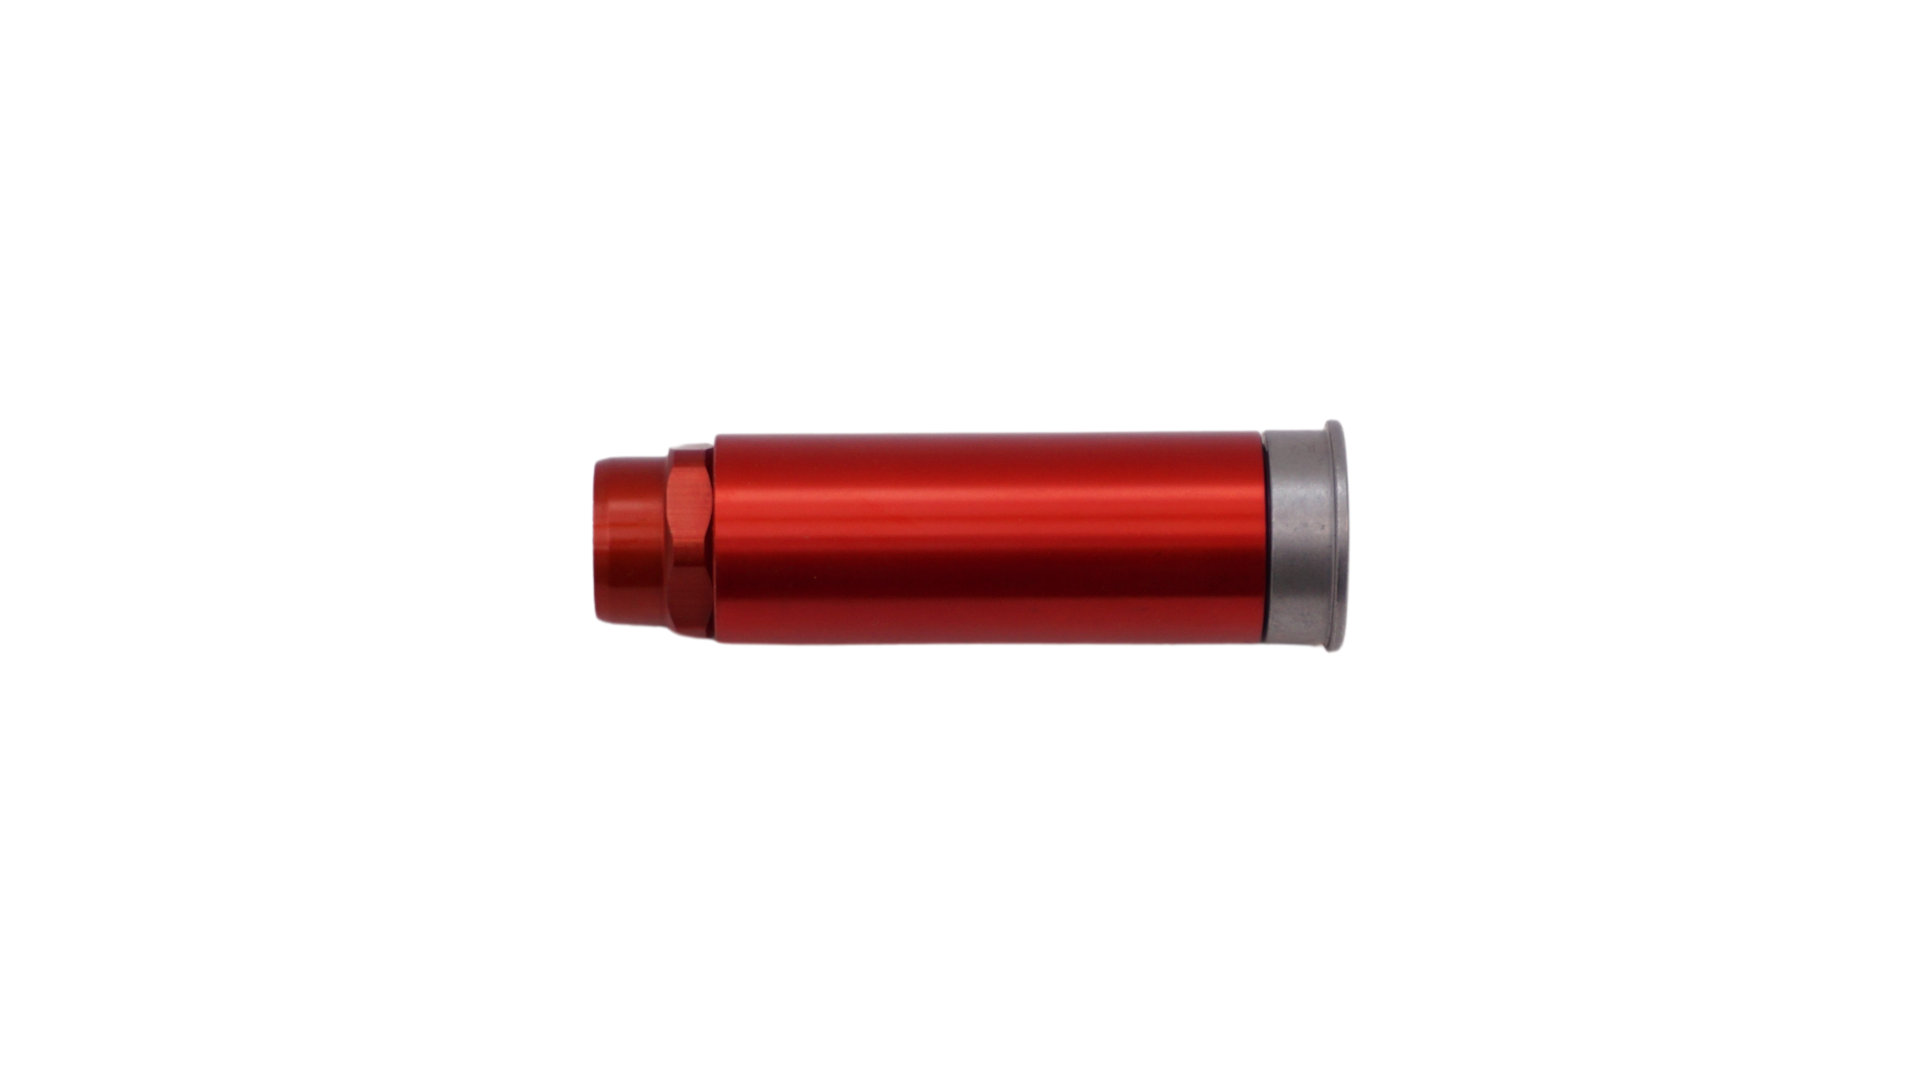 Replacement cartridge for Scuba Ashinger